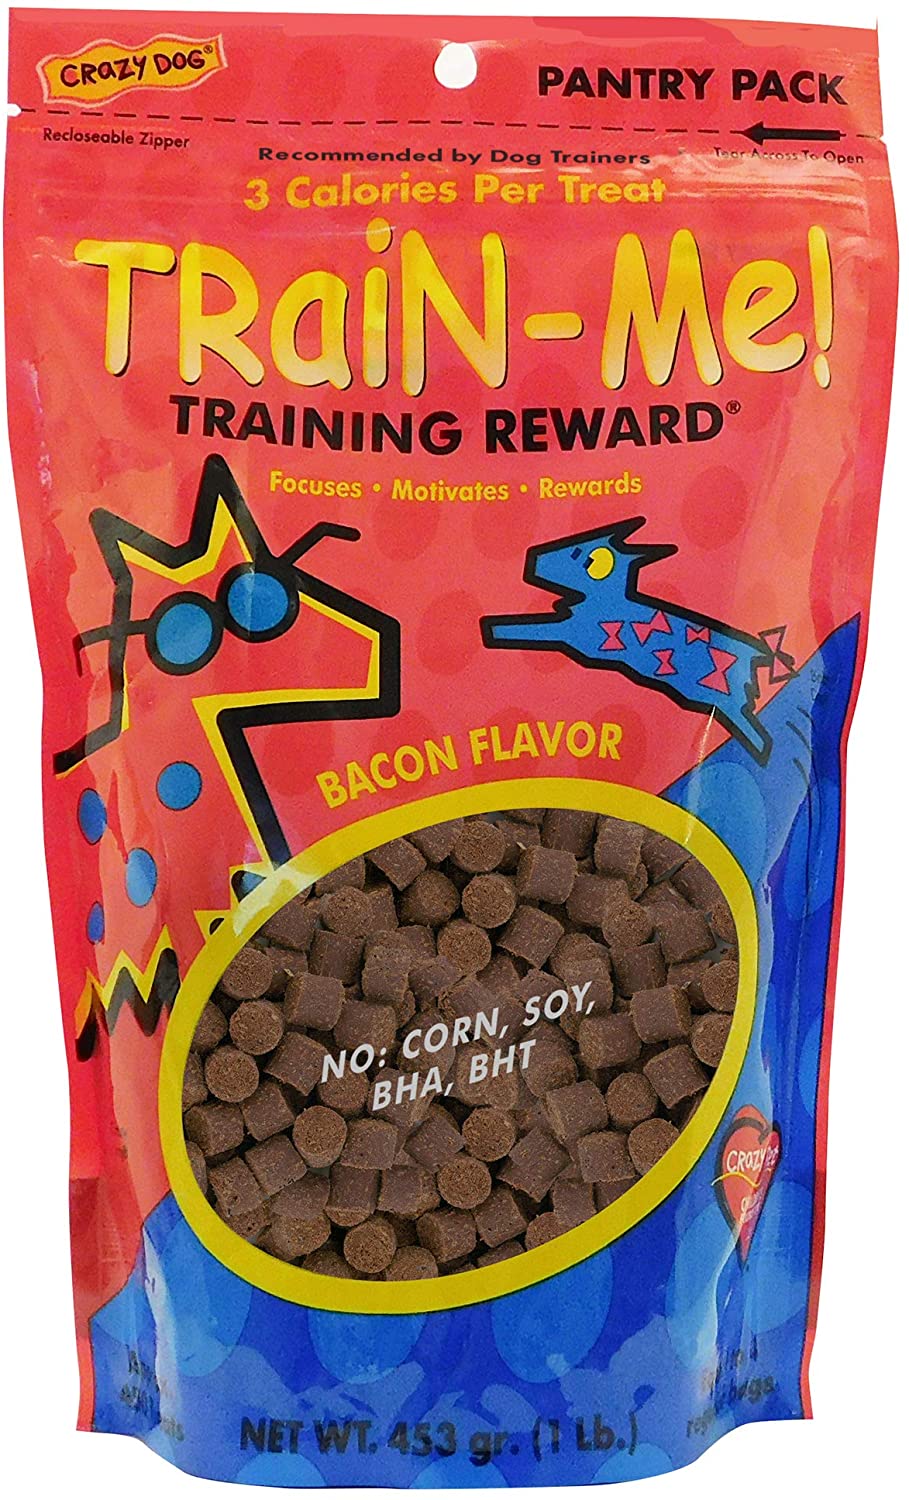 16-Oz Crazy Dog Train-Me! Training Reward Dog Treats (Bacon) $5.70 w/ S&S + Free Shipping w/ Amazon Prime or Orders $25+